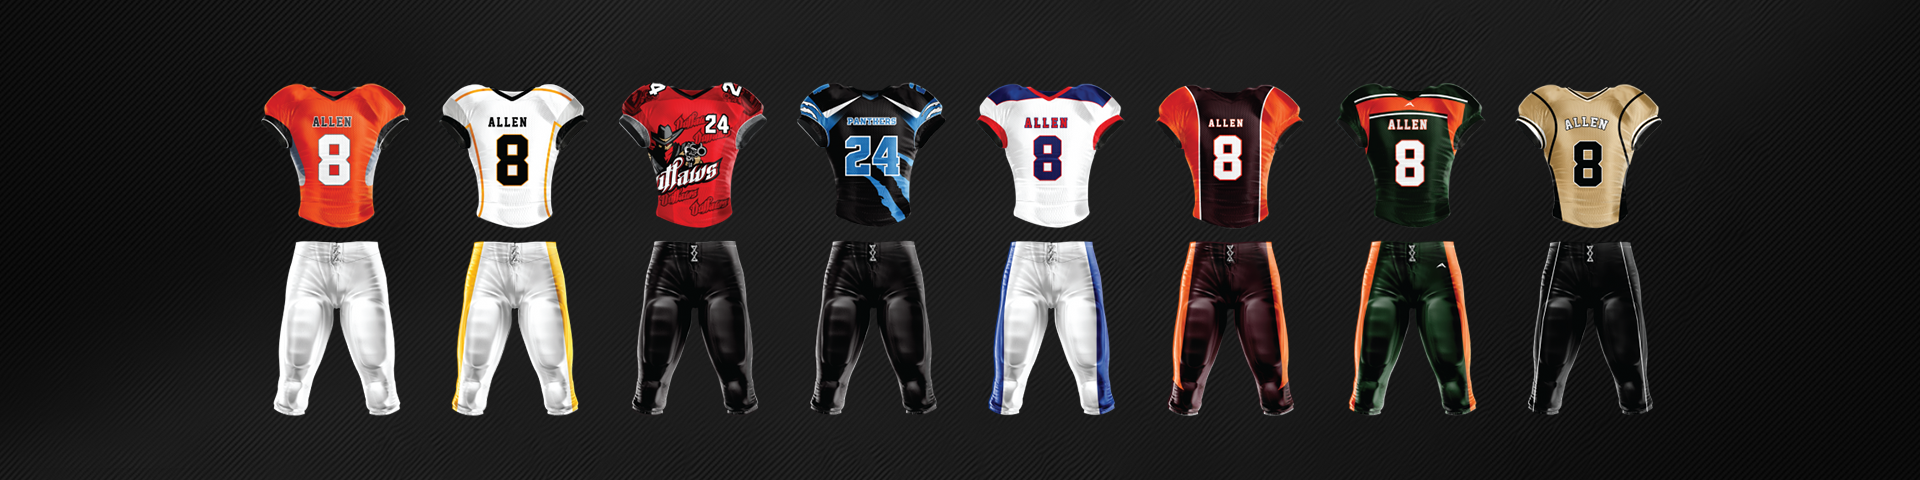 custom athletic uniforms